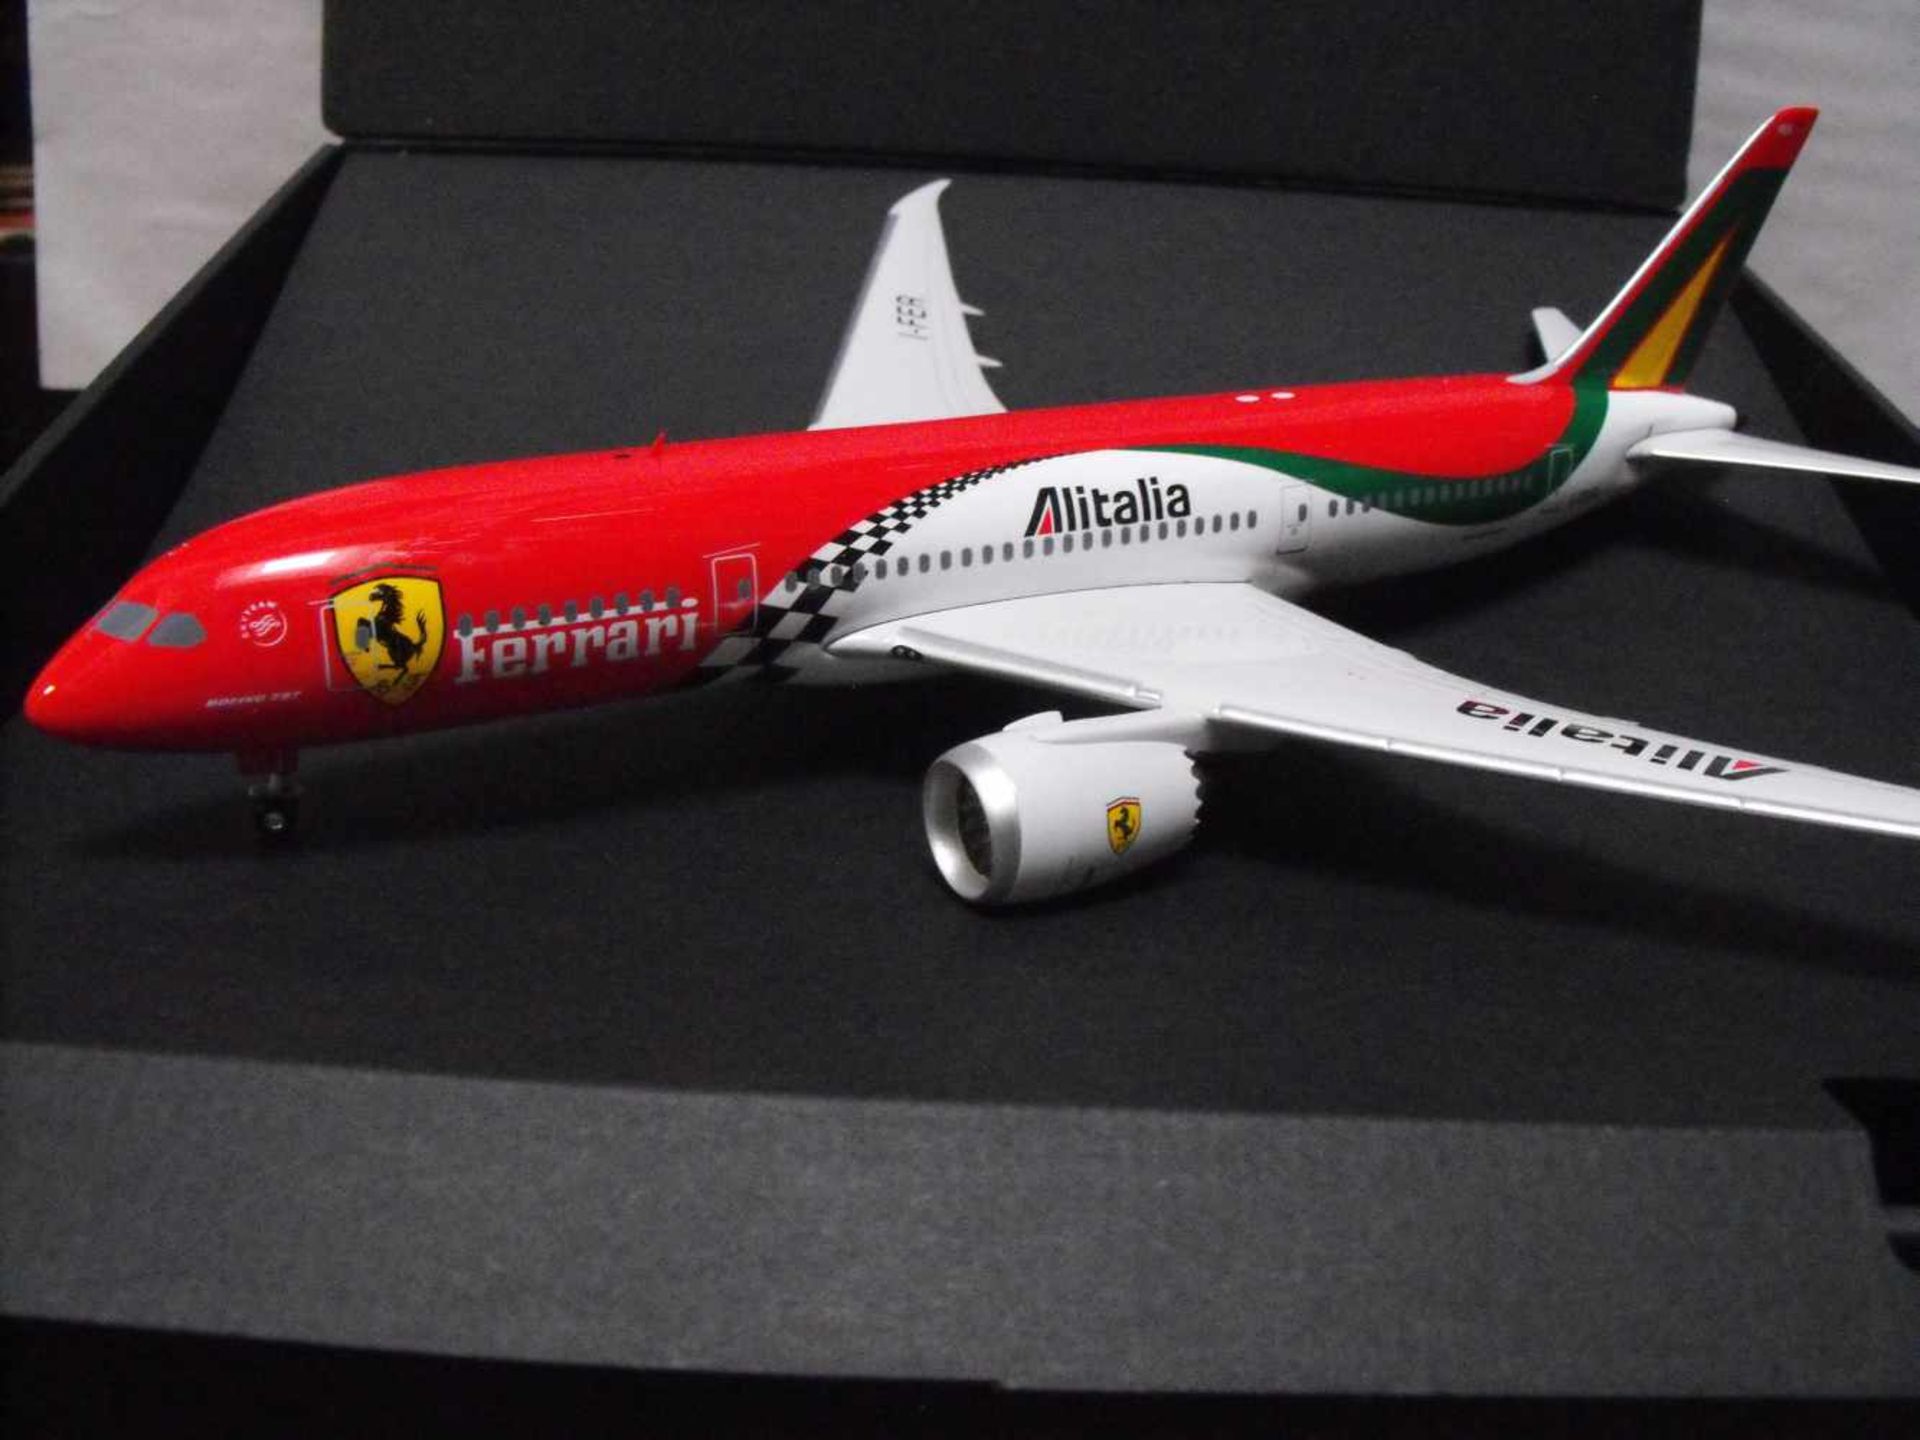 Phoenix 1/200 Alitalia "Ferrari librea" Boeing 787 "Very Rare" Reg # i-Fer 787 1:200 Model